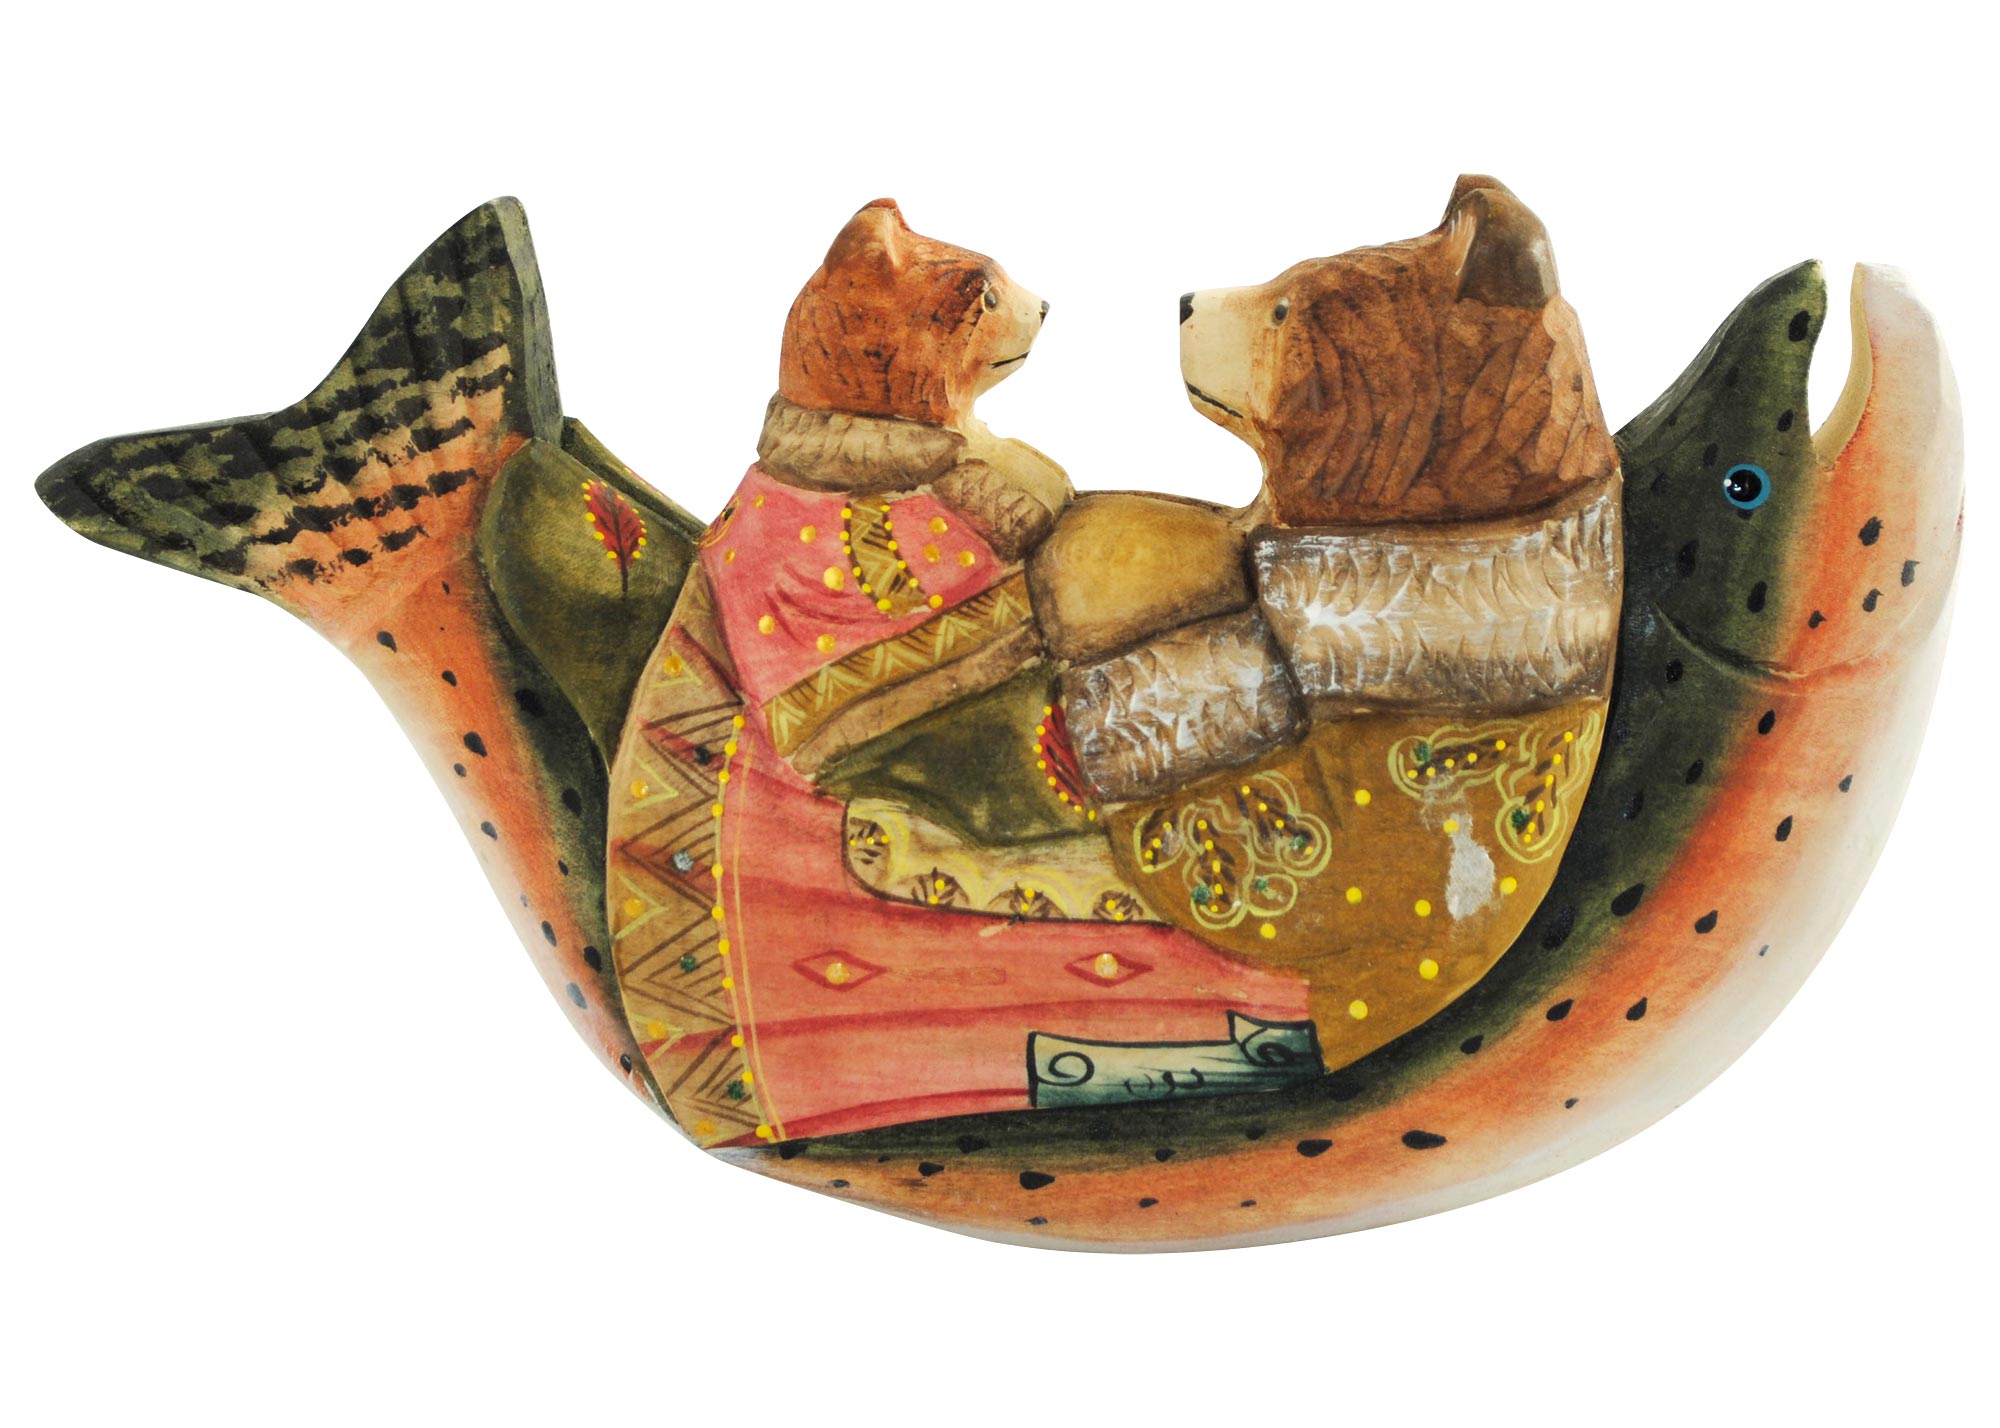 Buy 'Bedtime Story' Bears Wood Carving at GoldenCockerel.com